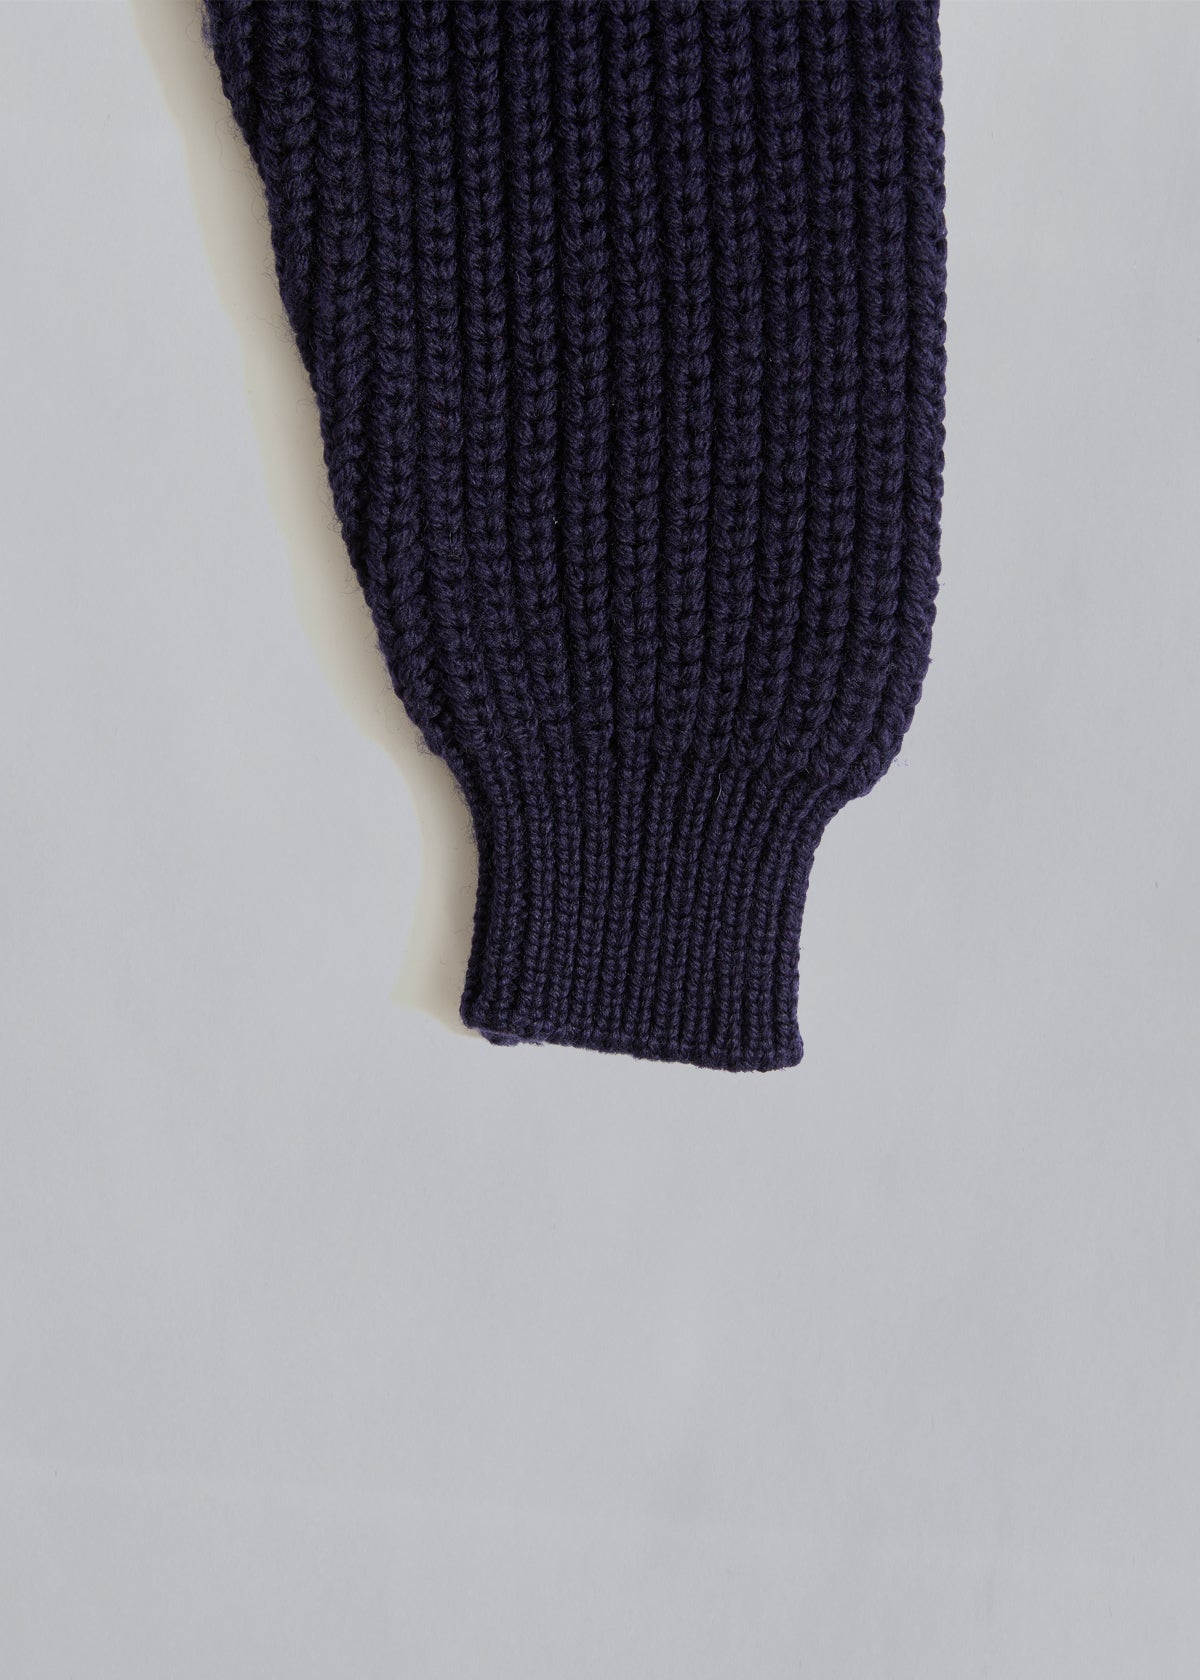 CDG Homme Norwegian Heavy Wool Knit 1980's - Large